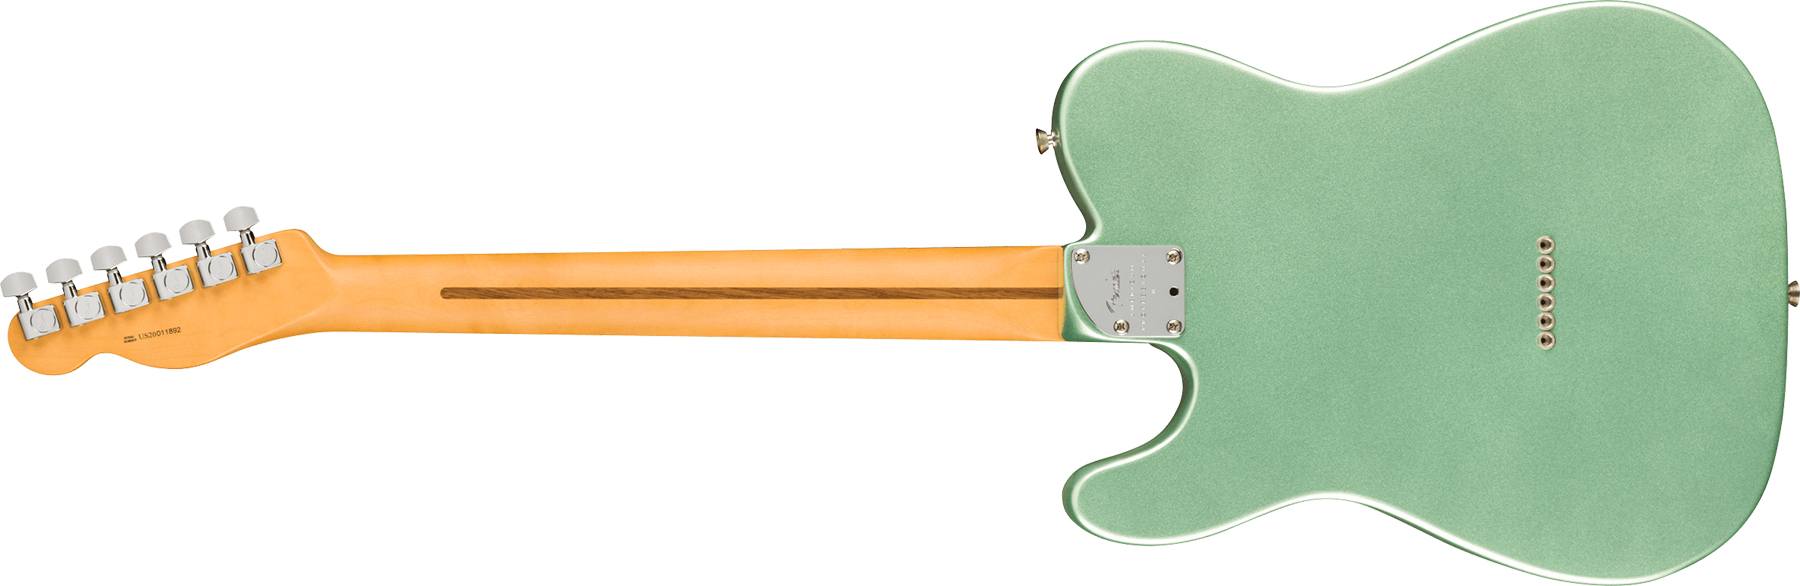 Fender Tele American Professional Ii Usa Rw - Mystic Surf Green - Guitarra eléctrica con forma de tel - Variation 1